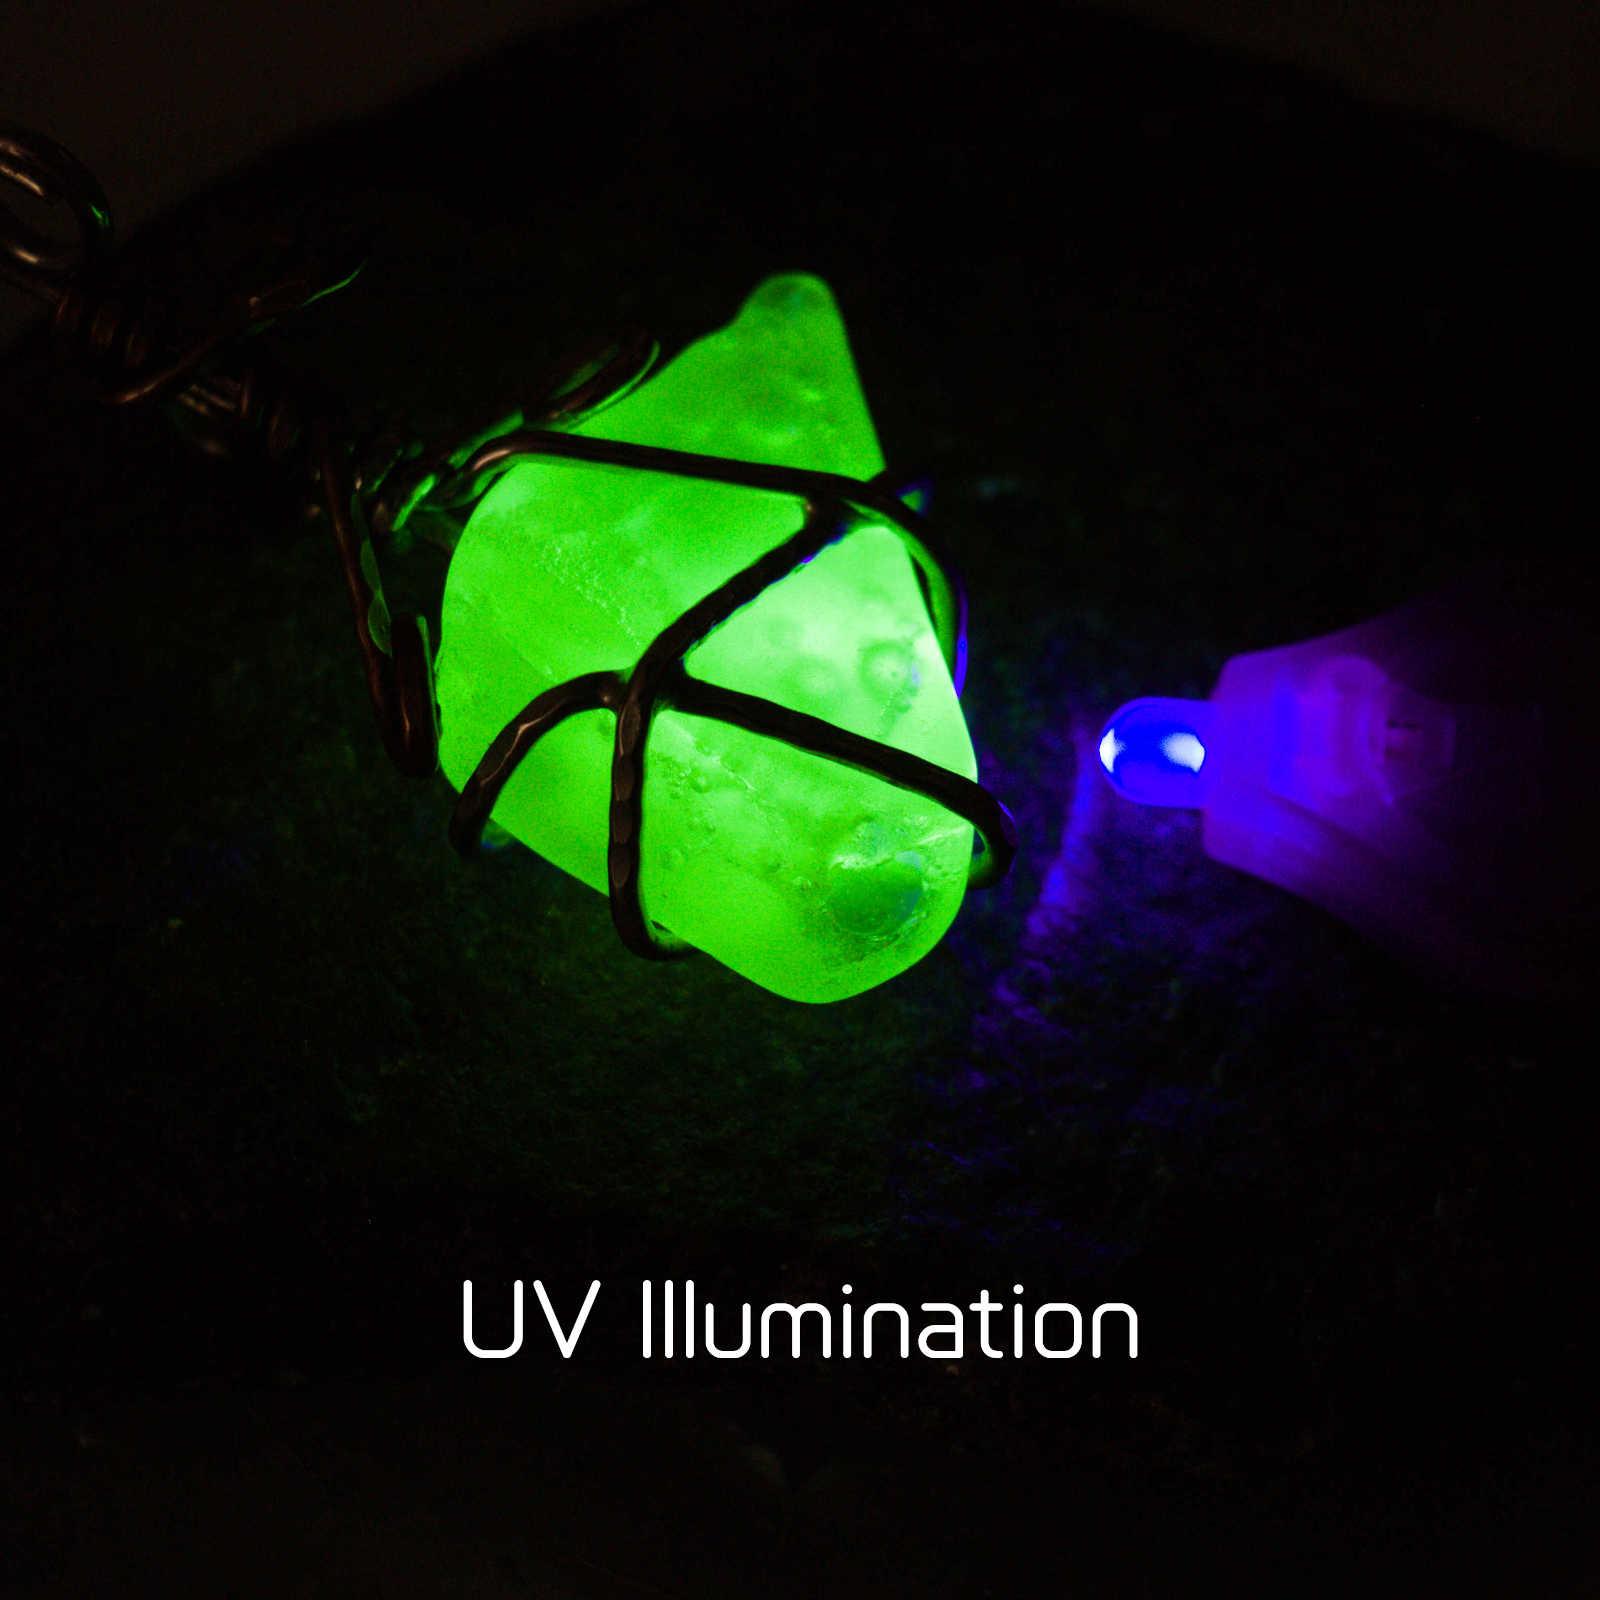 Uranium glass accessory under UV light